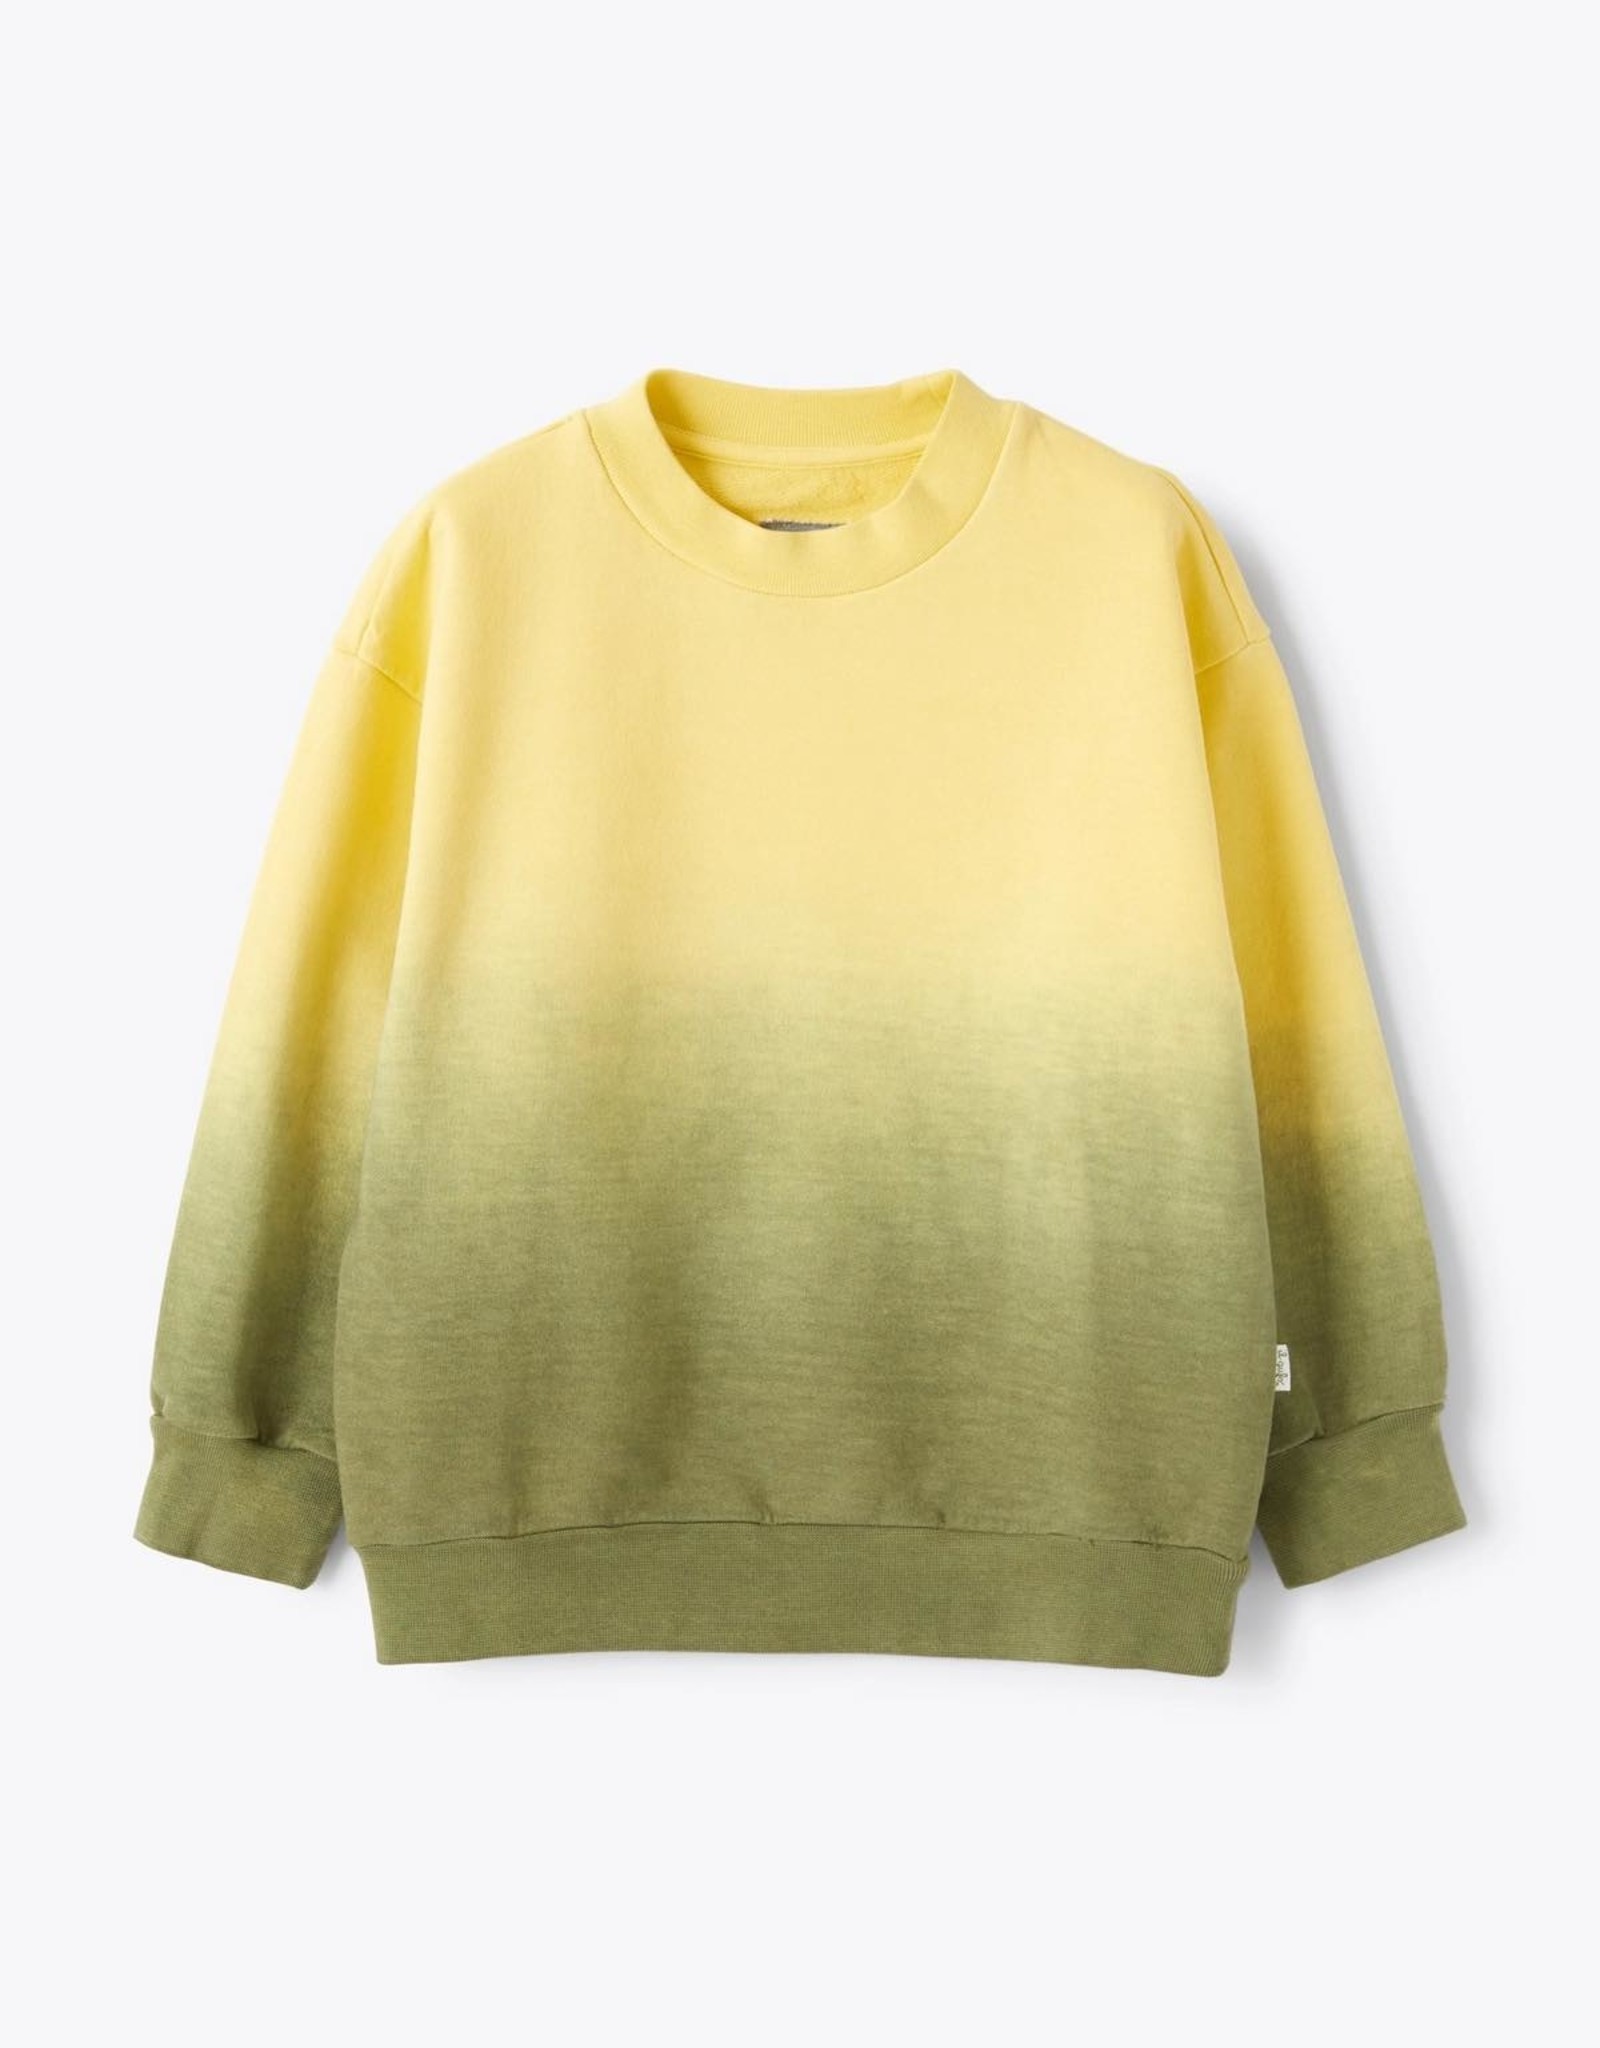 IL GUFO IL GUFO Sweater geel/khaki